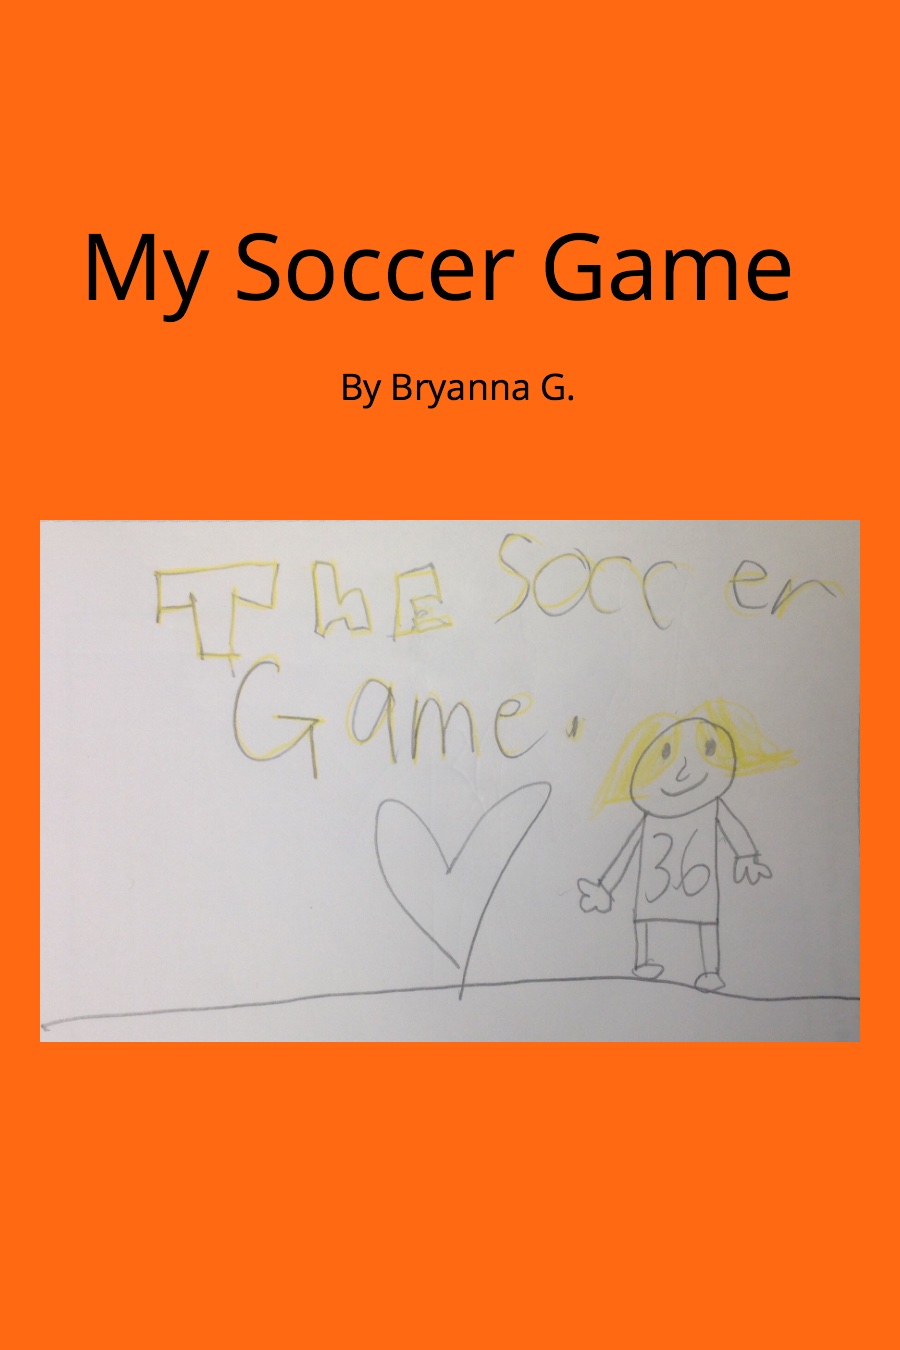 My Soccer Game by Bryanna G